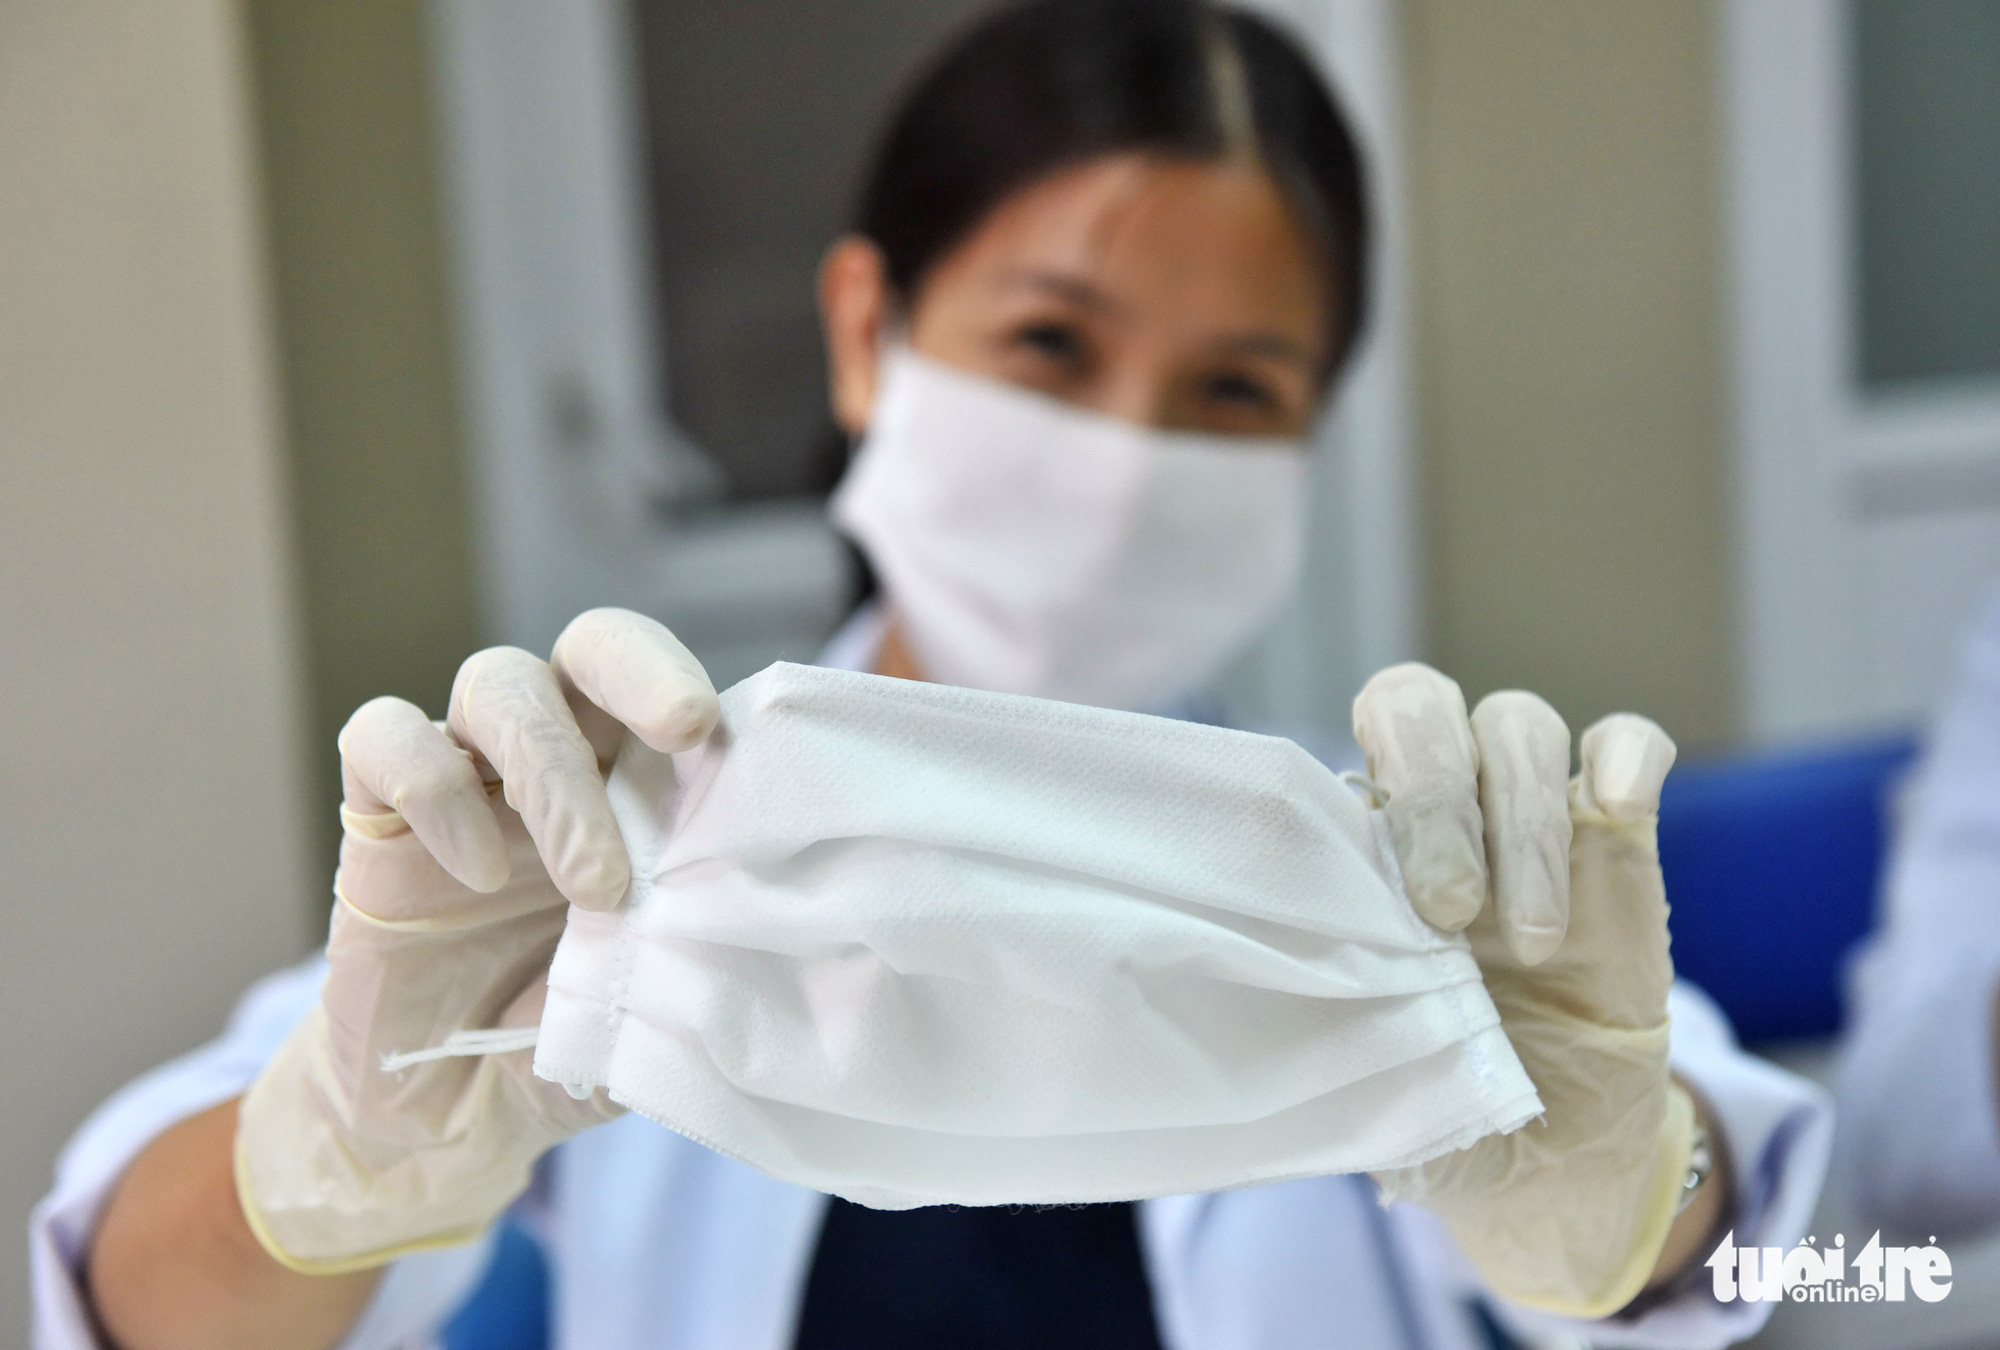 Medical staff make DIY face masks as COVID-19 triggers shortage in Vietnam